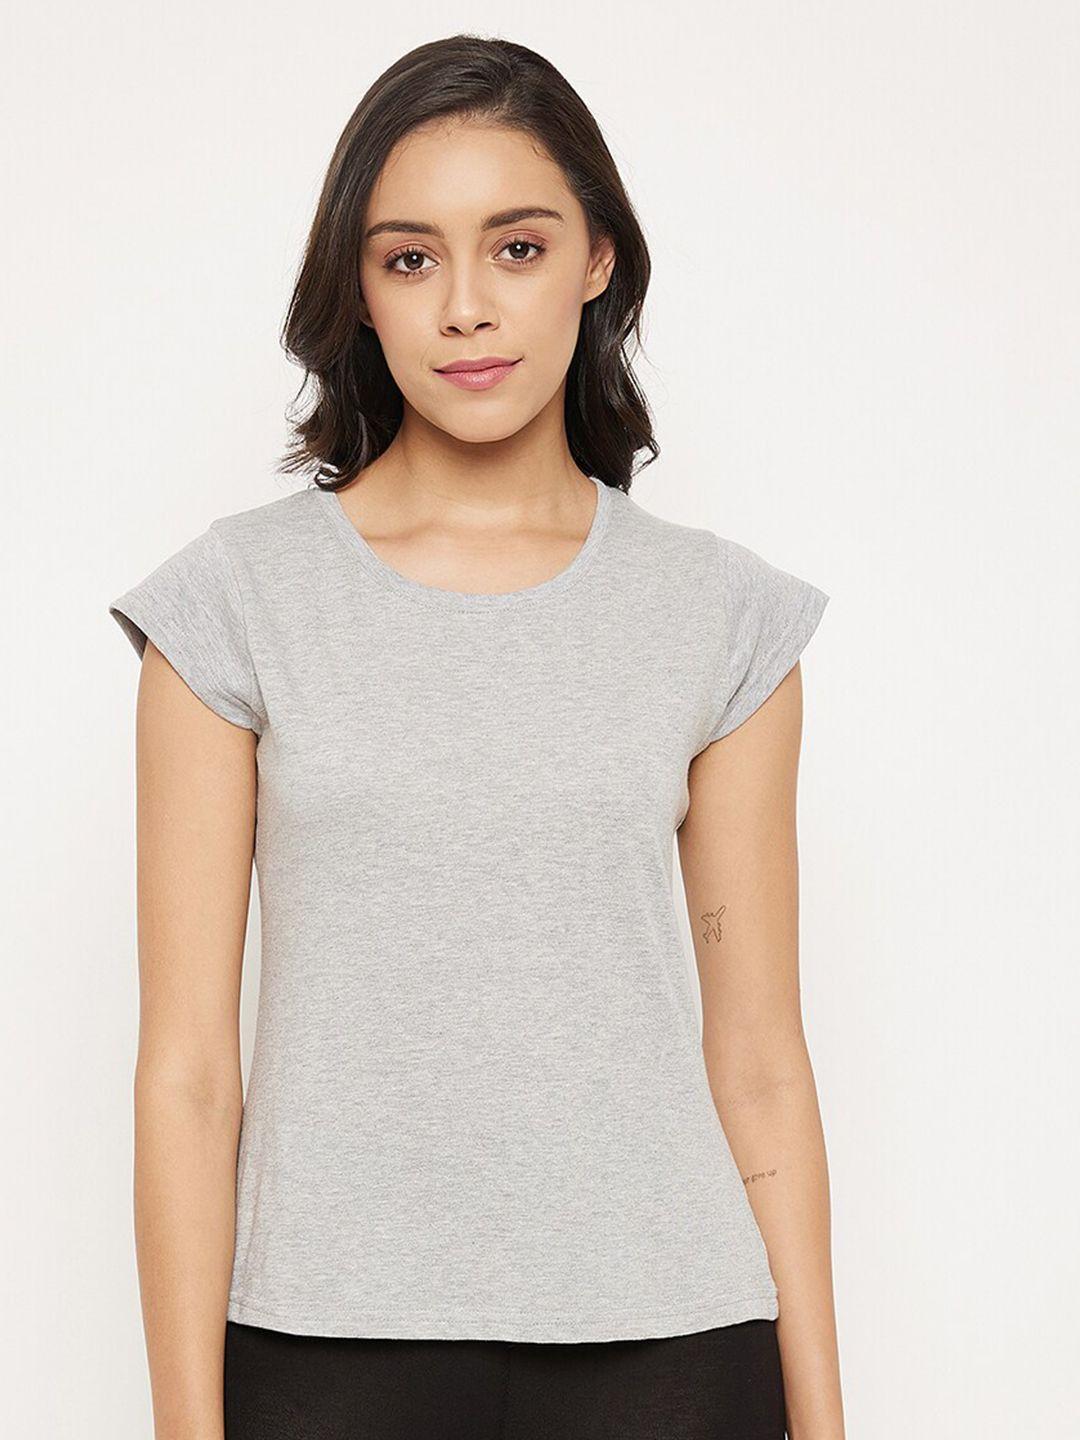 clovia women grey t-shirt